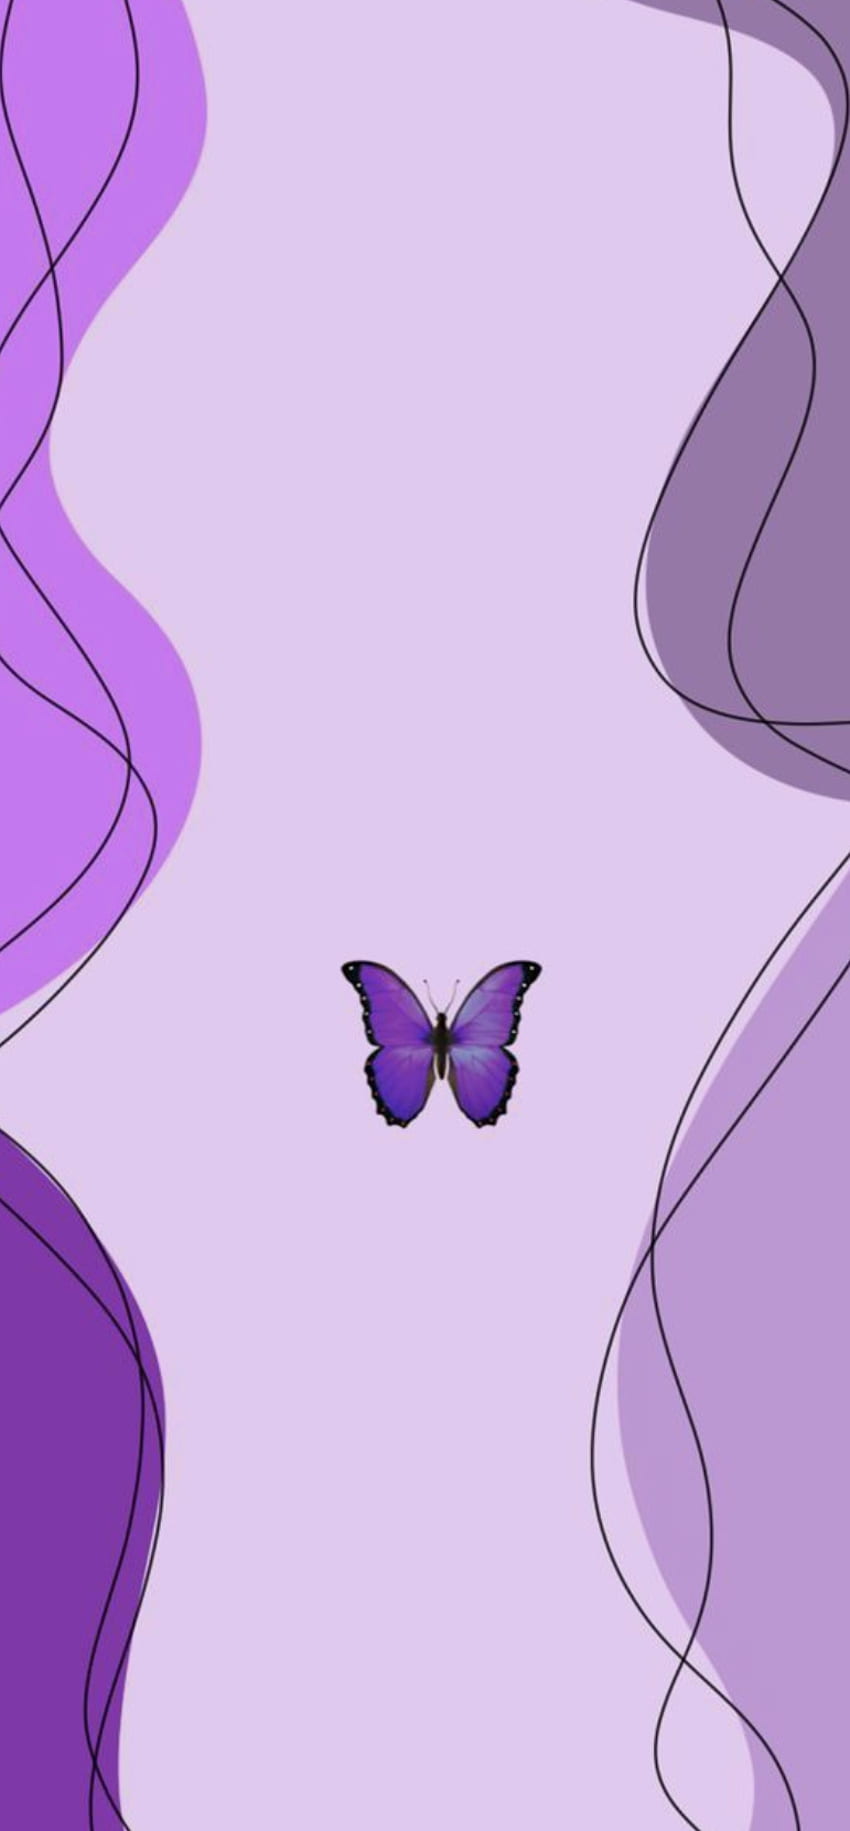 Aesthetic purple sparkle butterfly background   Purple butterfly  wallpaper Butterfly background Butterfly wallpaper